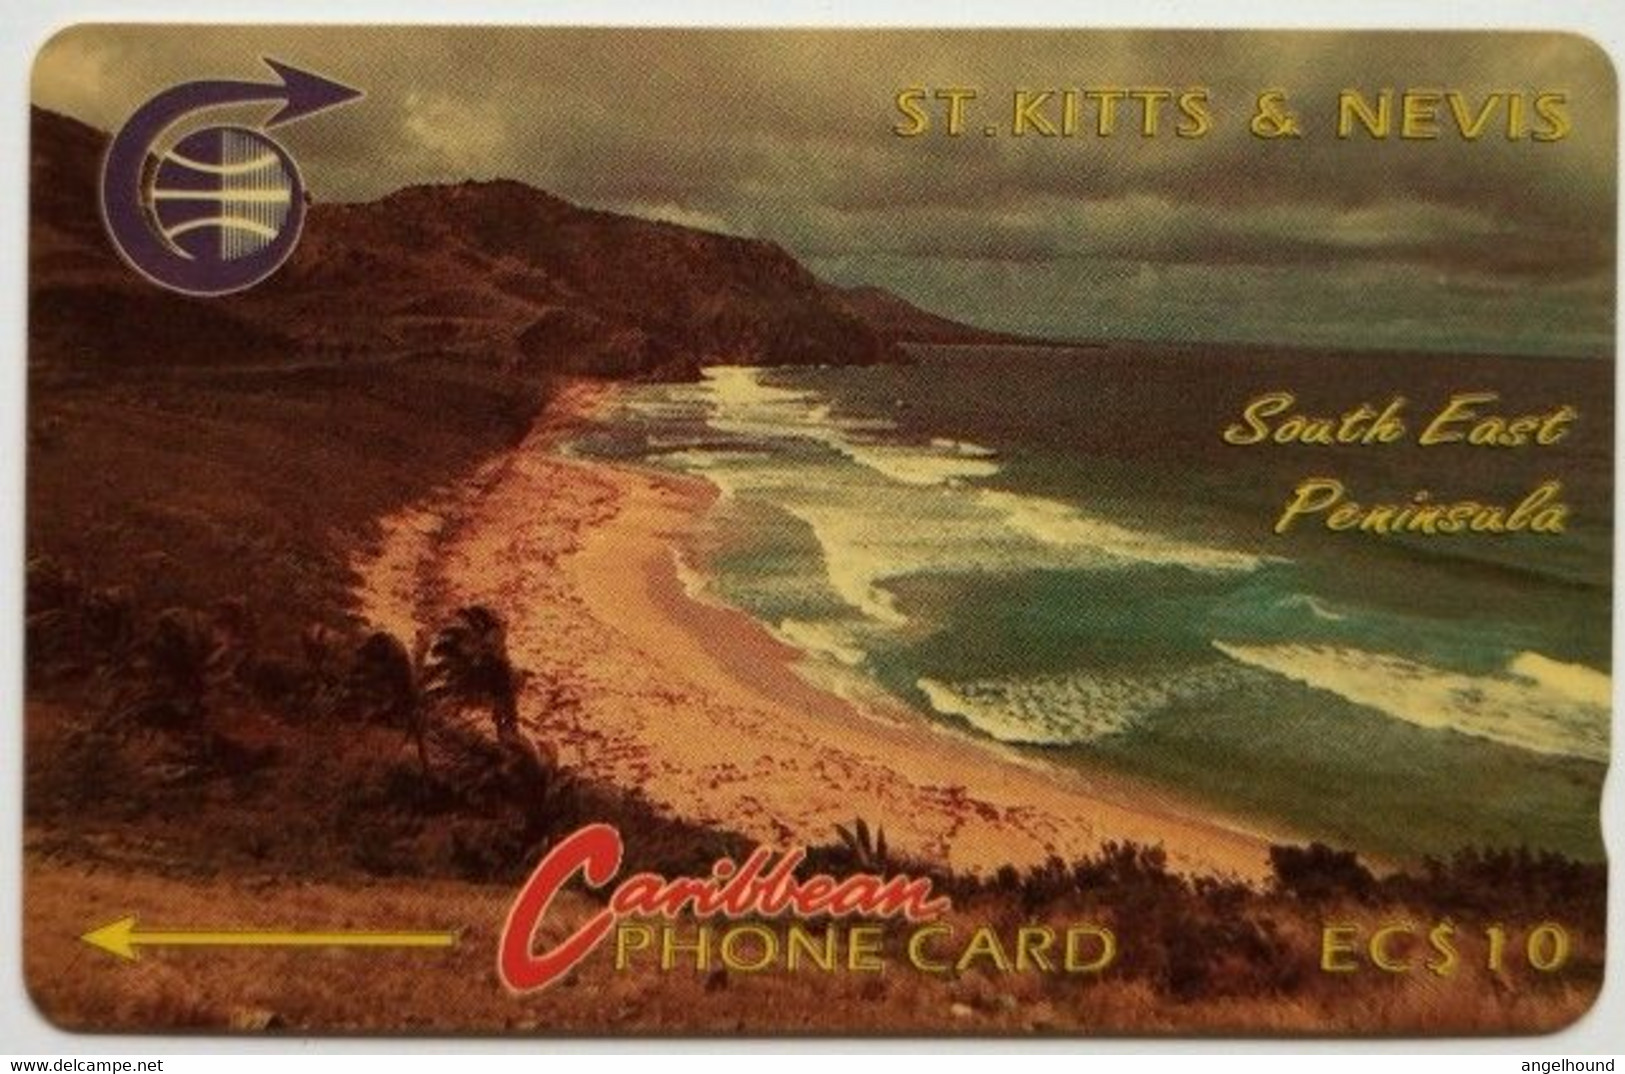 St. Kitts And Nevis  EC$10  3CSK  ( Error ) " South East Peninsula " - Saint Kitts & Nevis